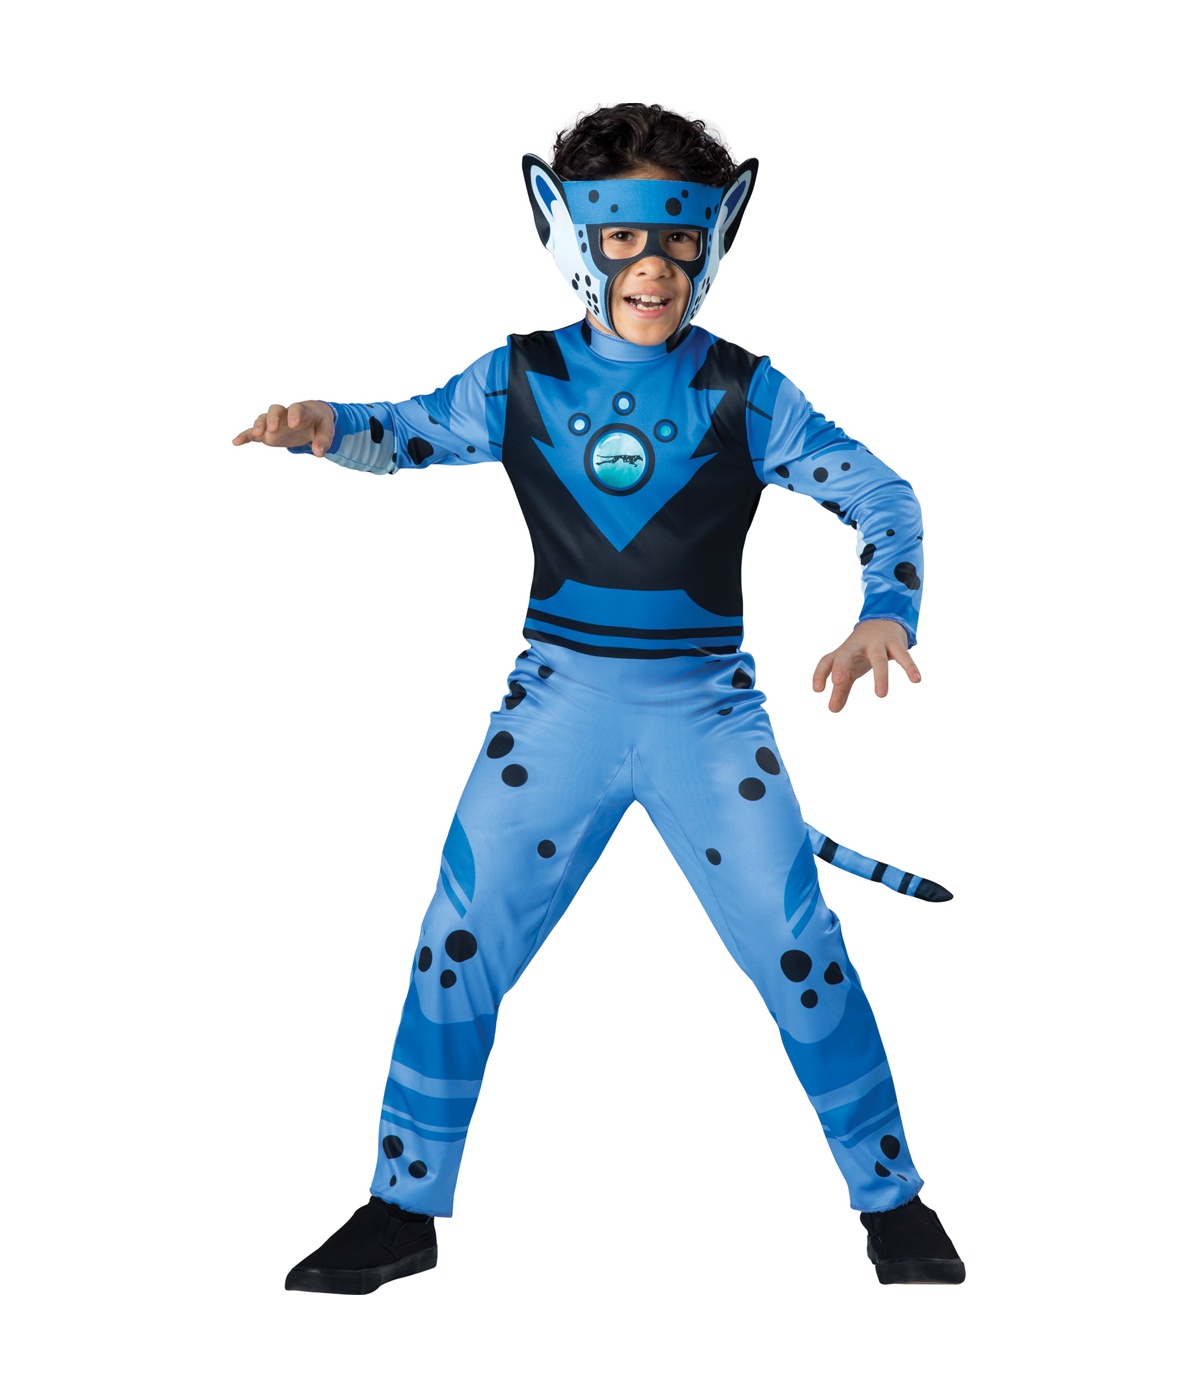  Boys Blue Cheetah Costume